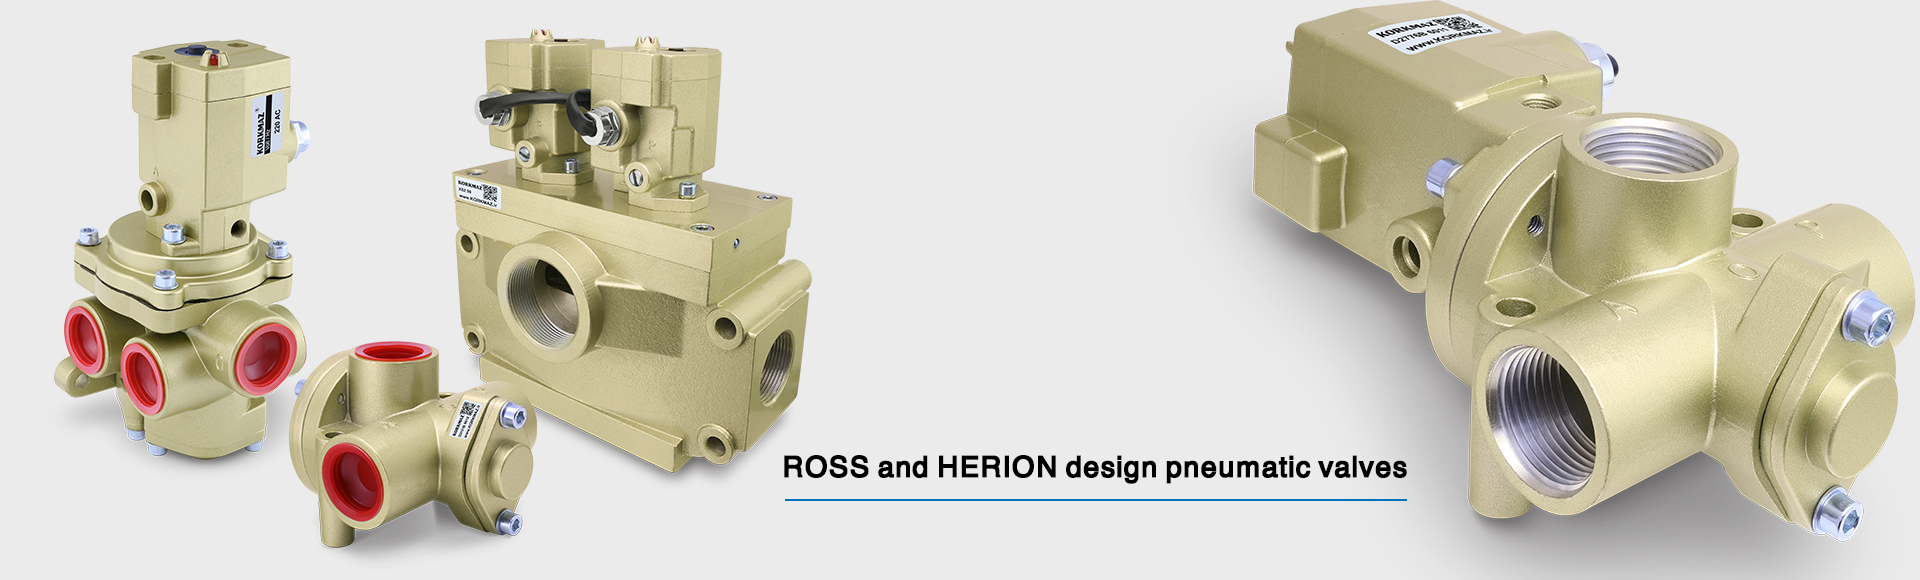 Pneumatic valve - Ross design valve - Herrion design valve